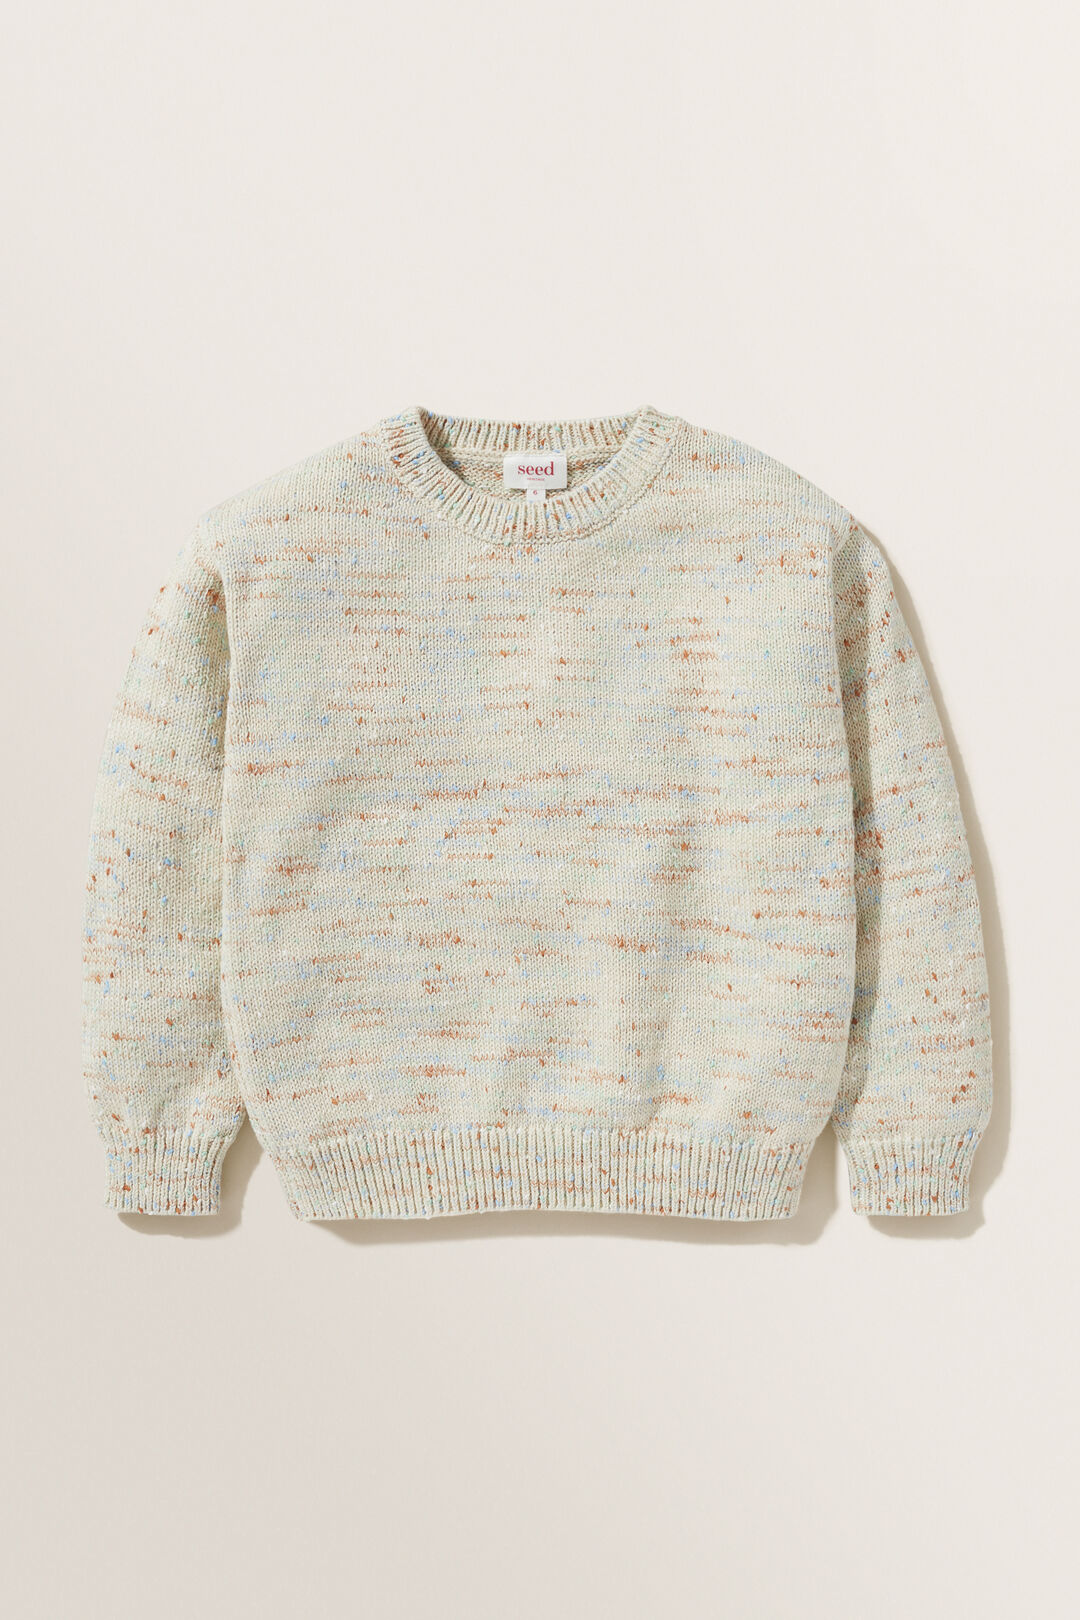 Speckle Knit Sweater  Multi  hi-res